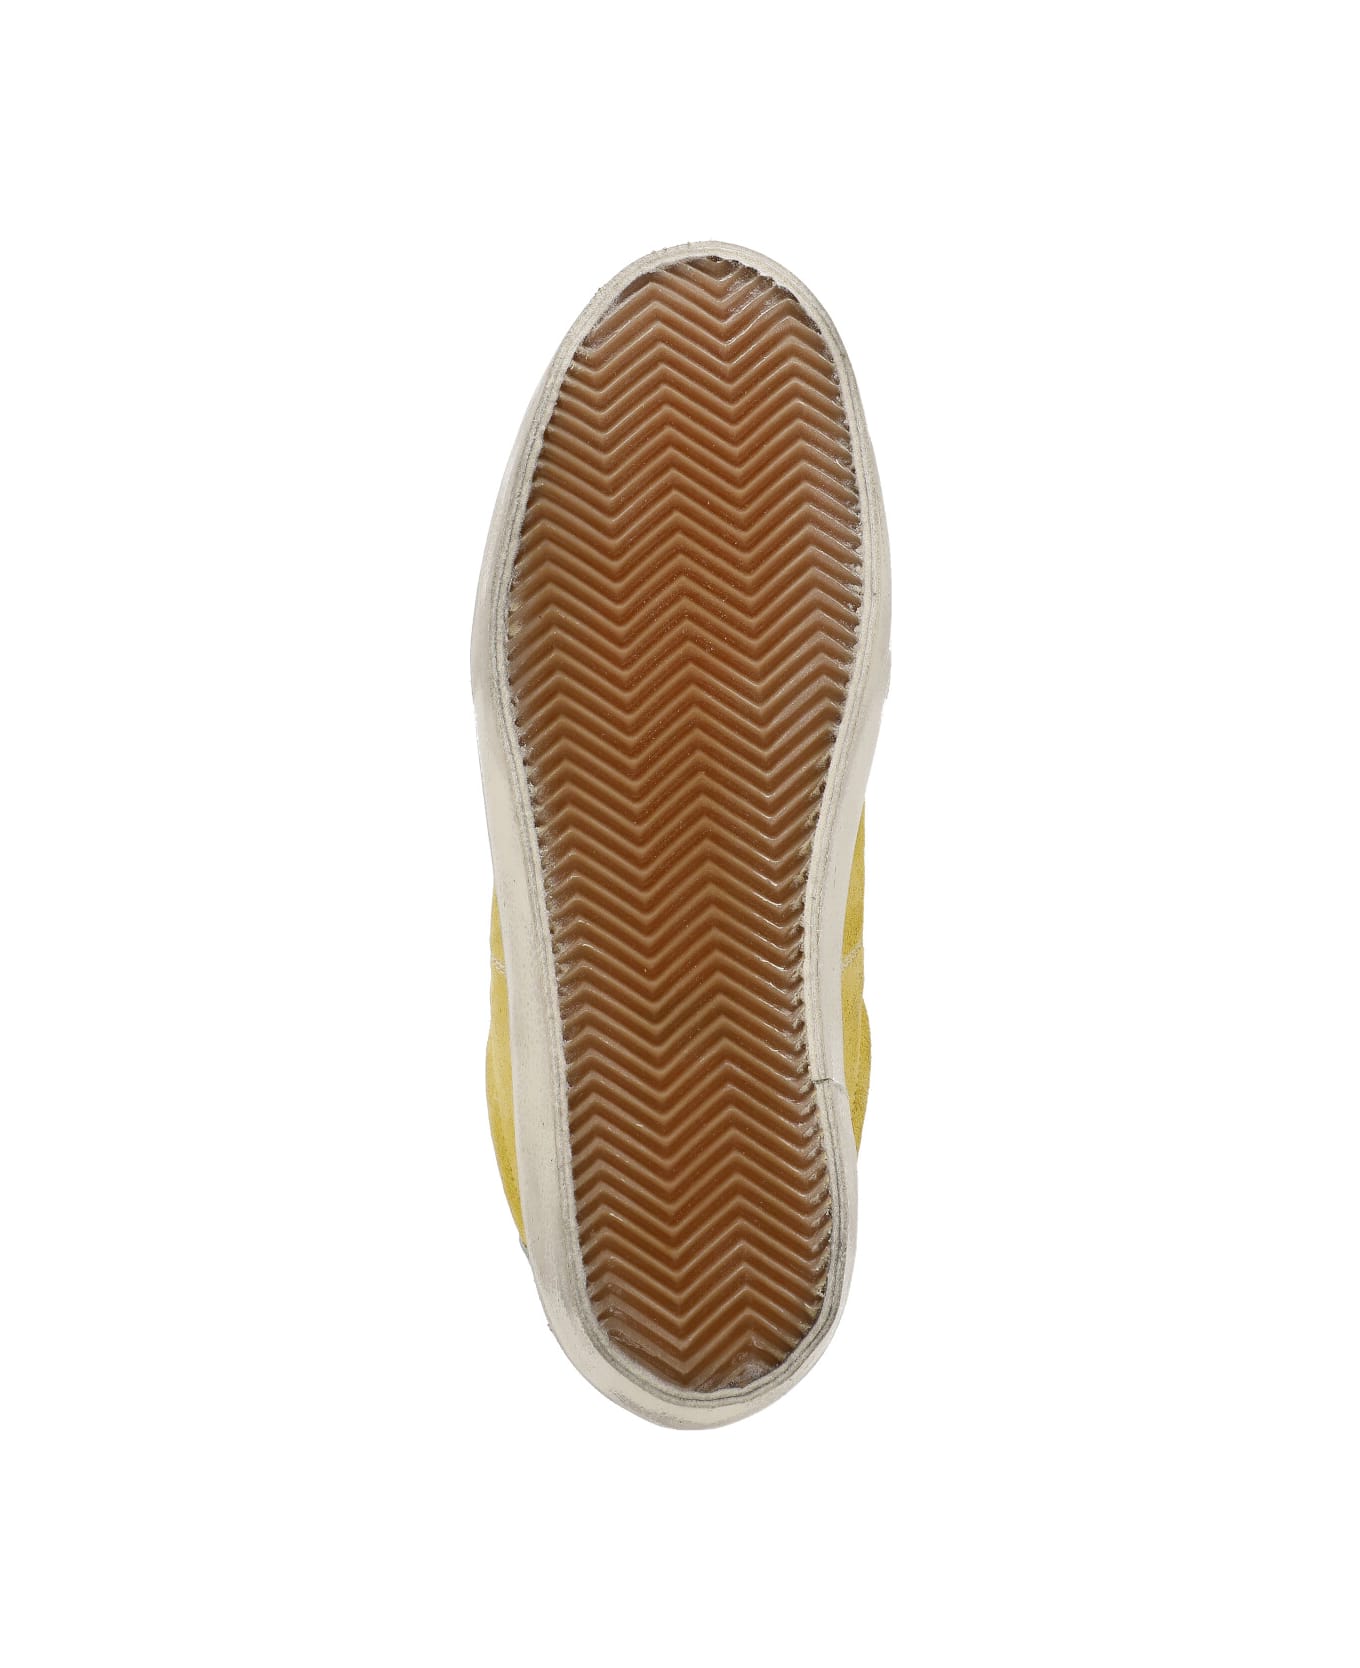 Golden Goose Soul Sneakers - Yellow